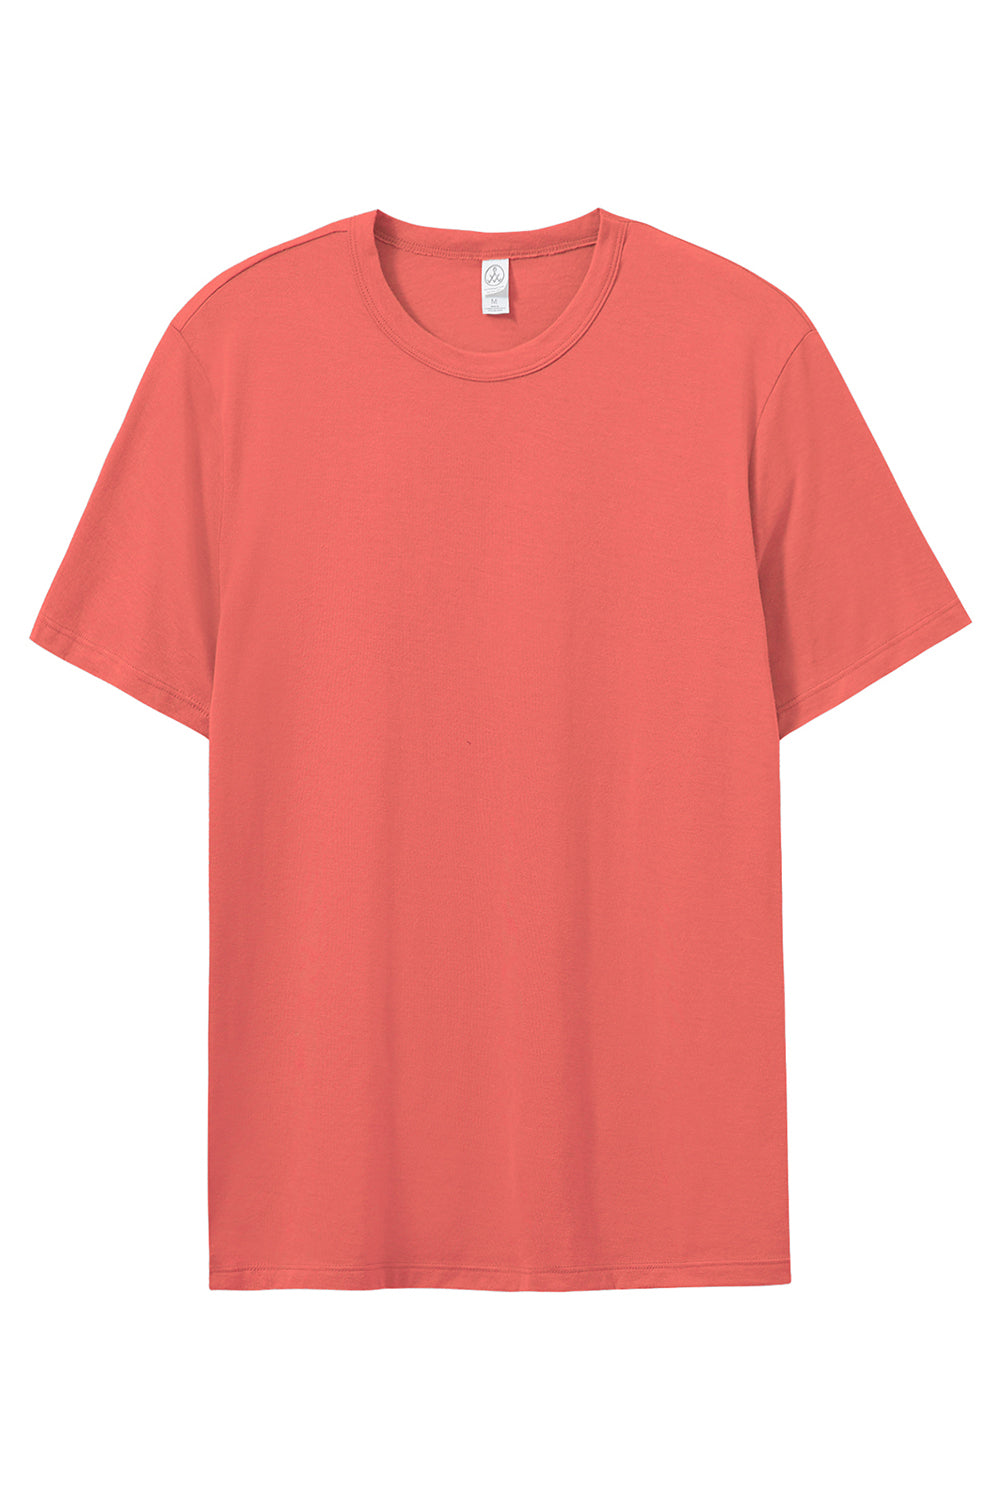 Alternative 4400HM Mens Modal Short Sleeve Crewneck T-Shirt Faded Red Flat Front